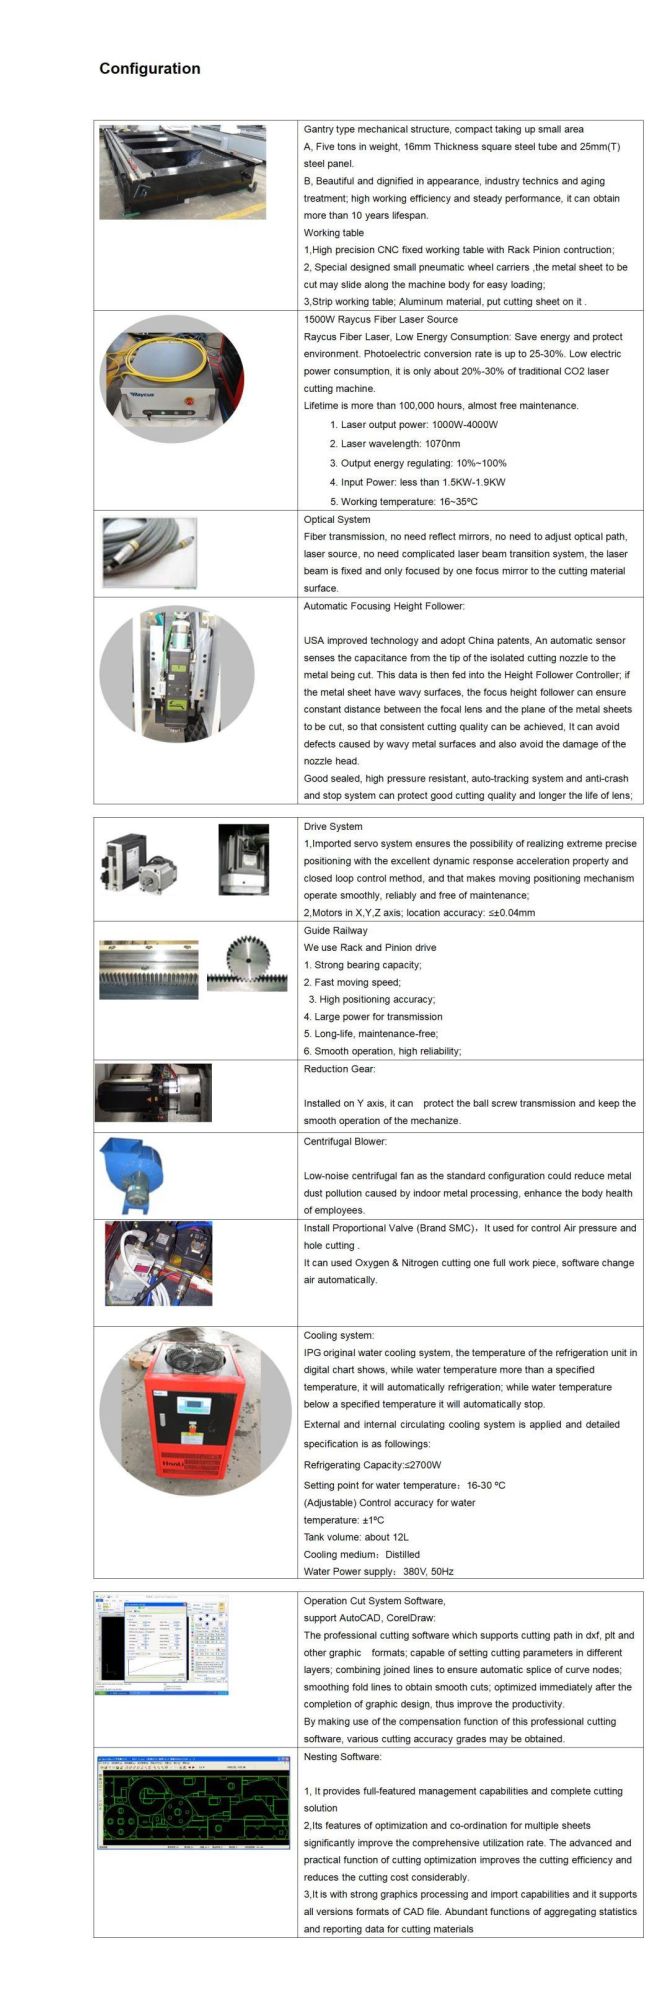 3015 4020 6025 Sheet Metal Cutting Plate Stainless Steel Carbon Steel Fiber Laser Cutting Machine